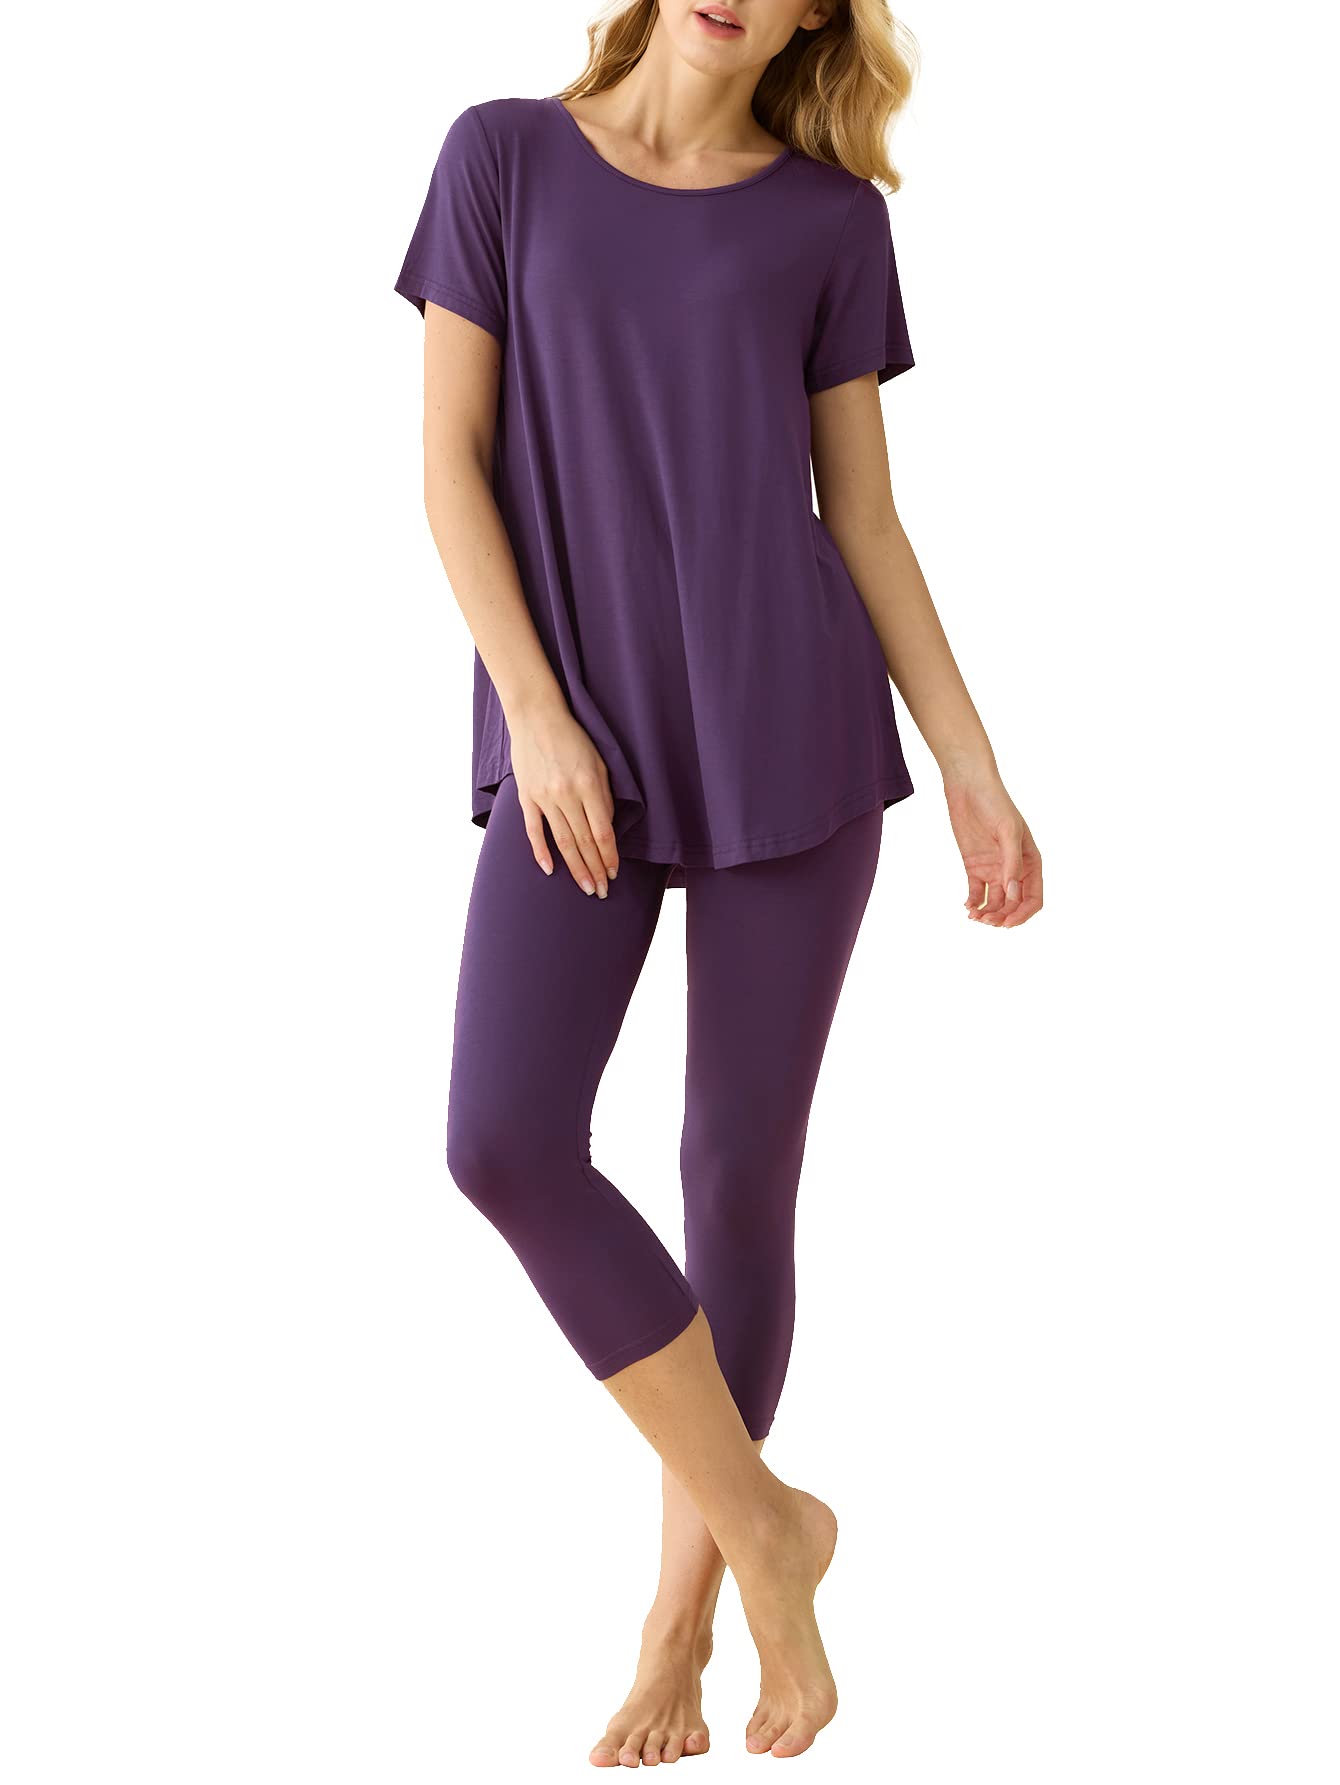 GAIAM Yoga Pants Tank Top Set PJs Pajamas Lavender Lace XL/SM